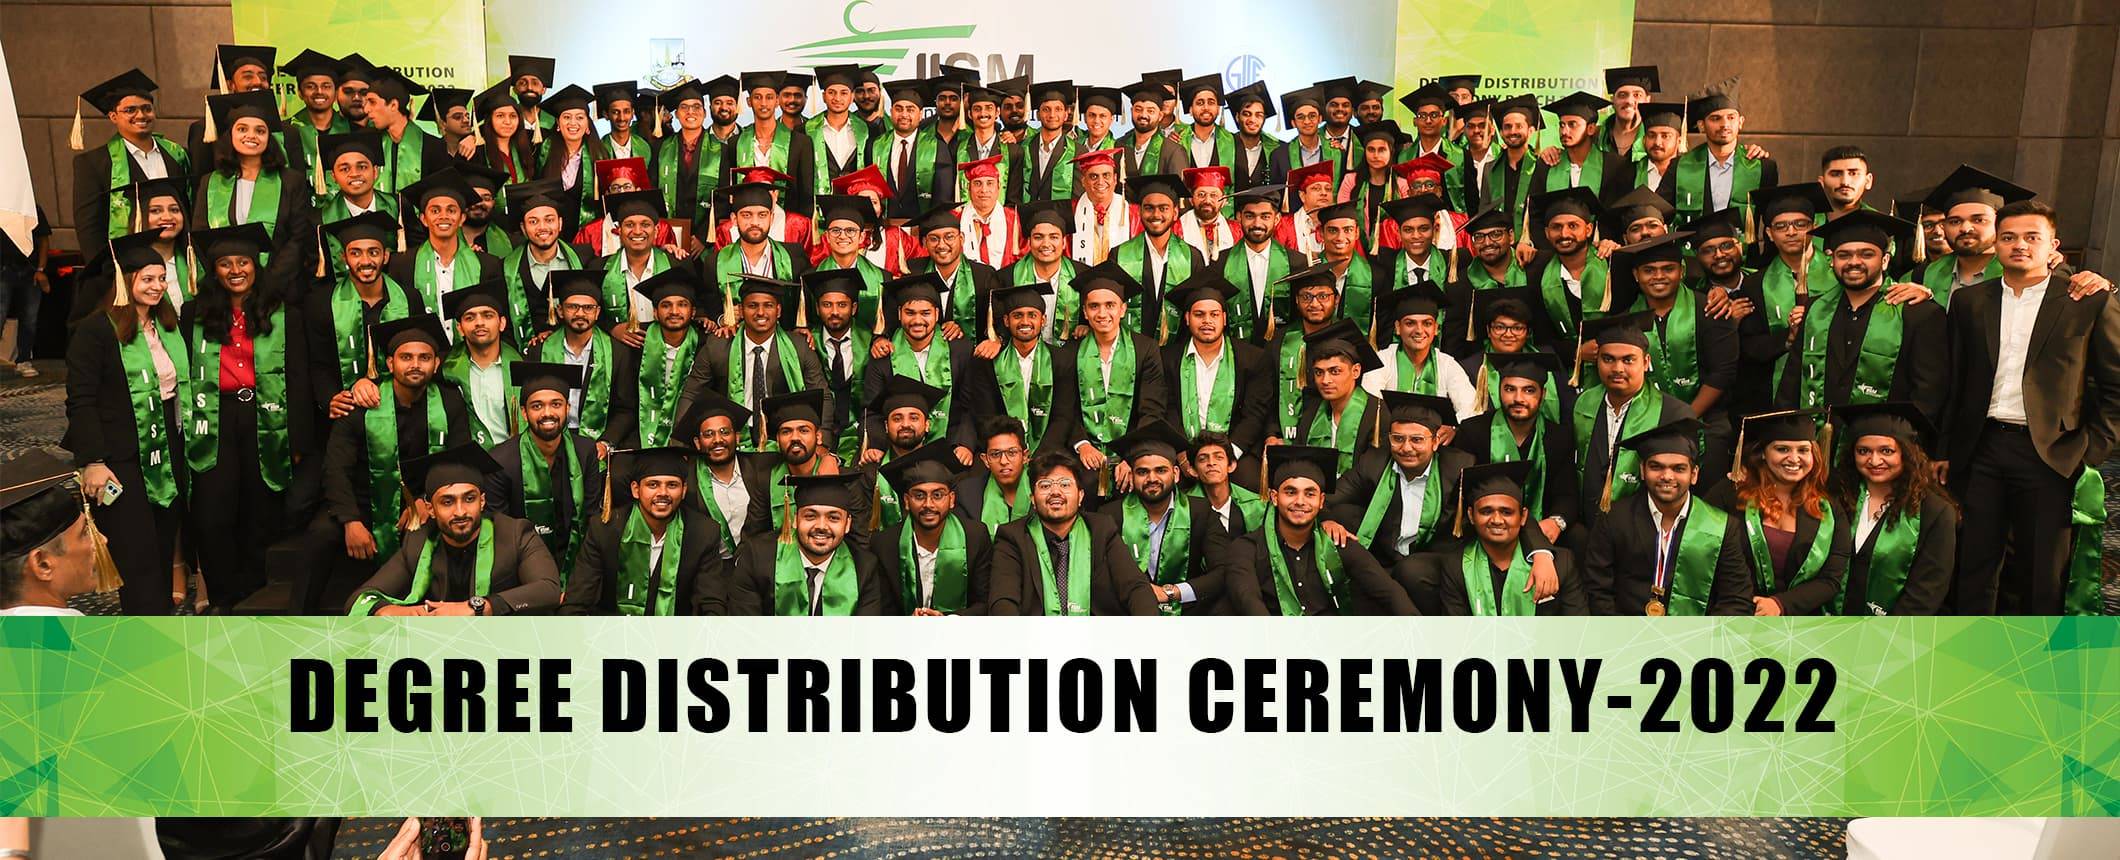 Degree Distribution Ceremony